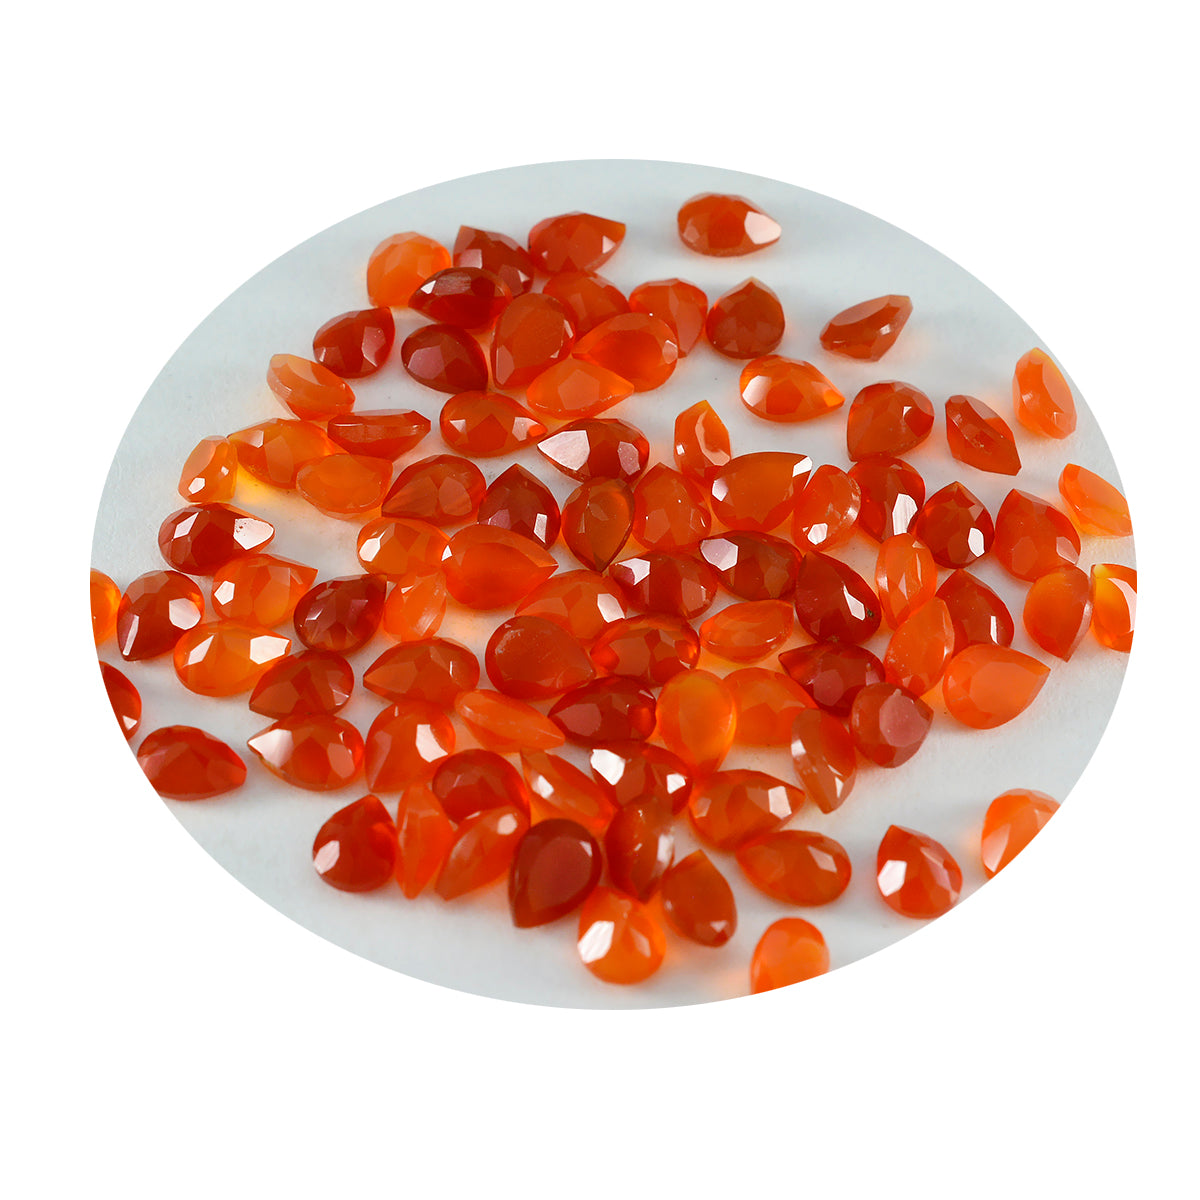 Riyogems 1PC Natural Red Onyx Faceted 4x6 mm Pear Shape wonderful Quality Loose Gems